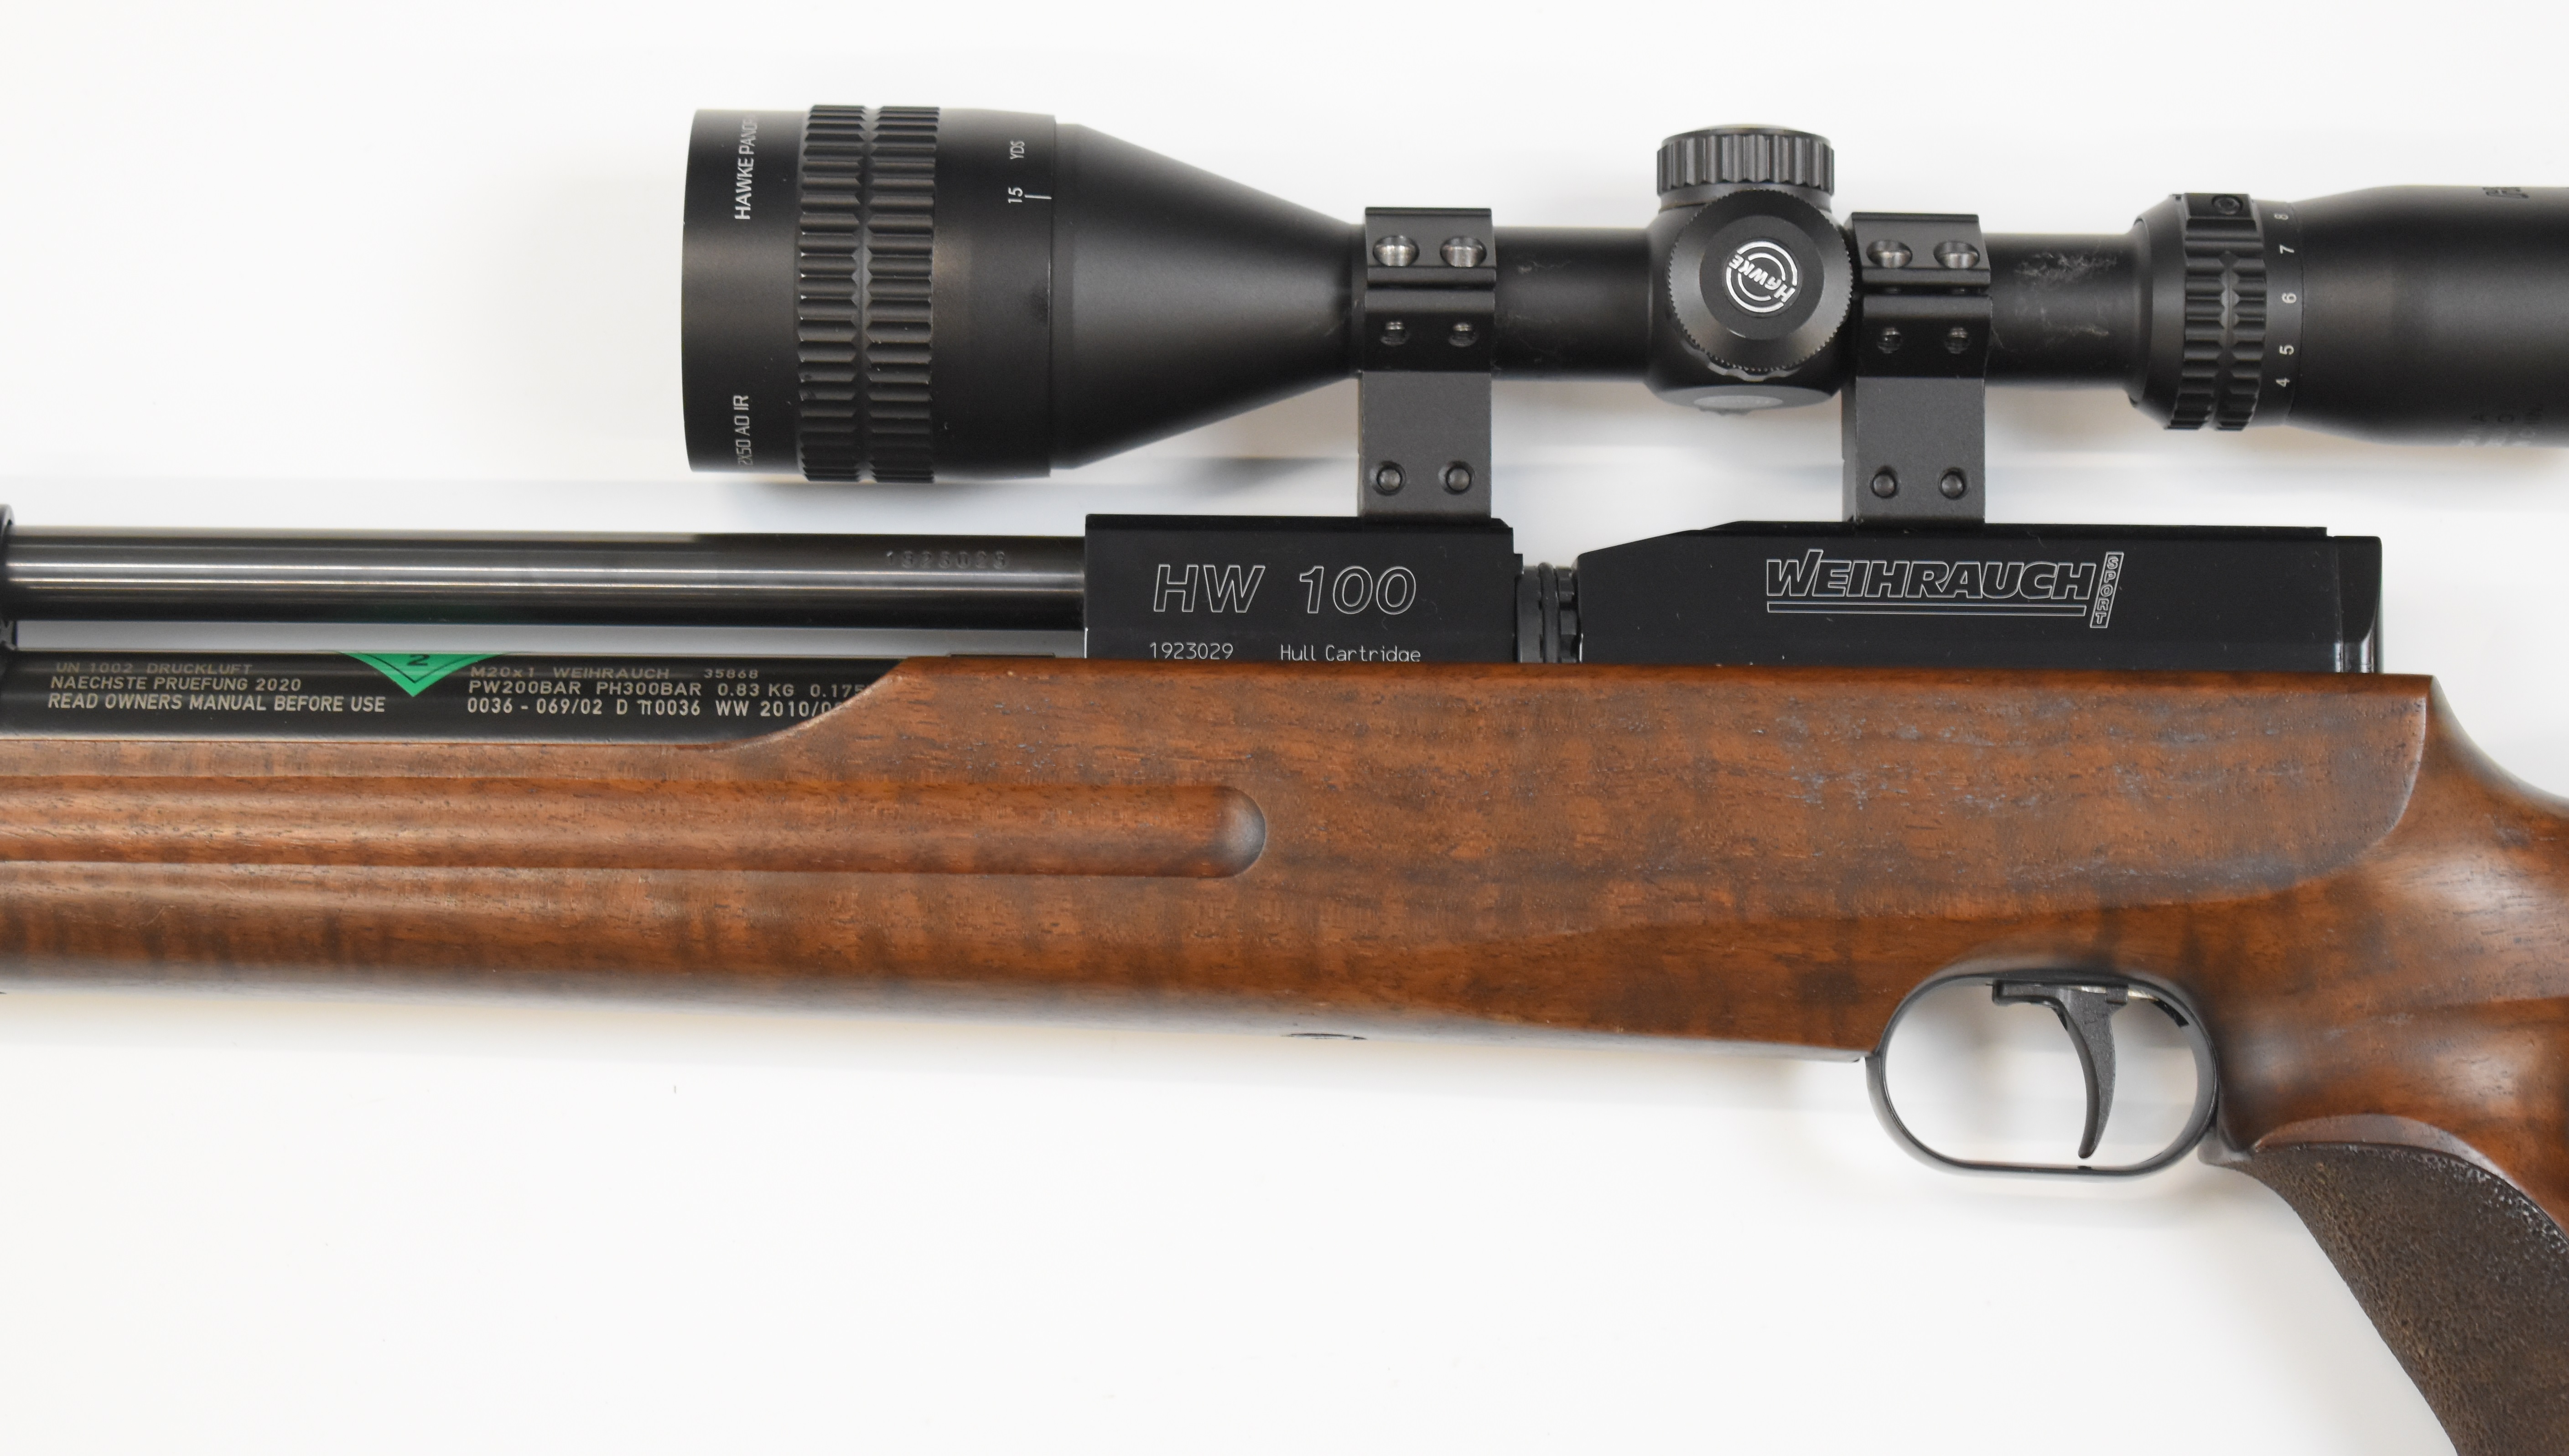 Weihrauch HW100 .177 PCP air rifle with textured semi-pistol grip, raised cheek piece, adjustable - Image 8 of 10